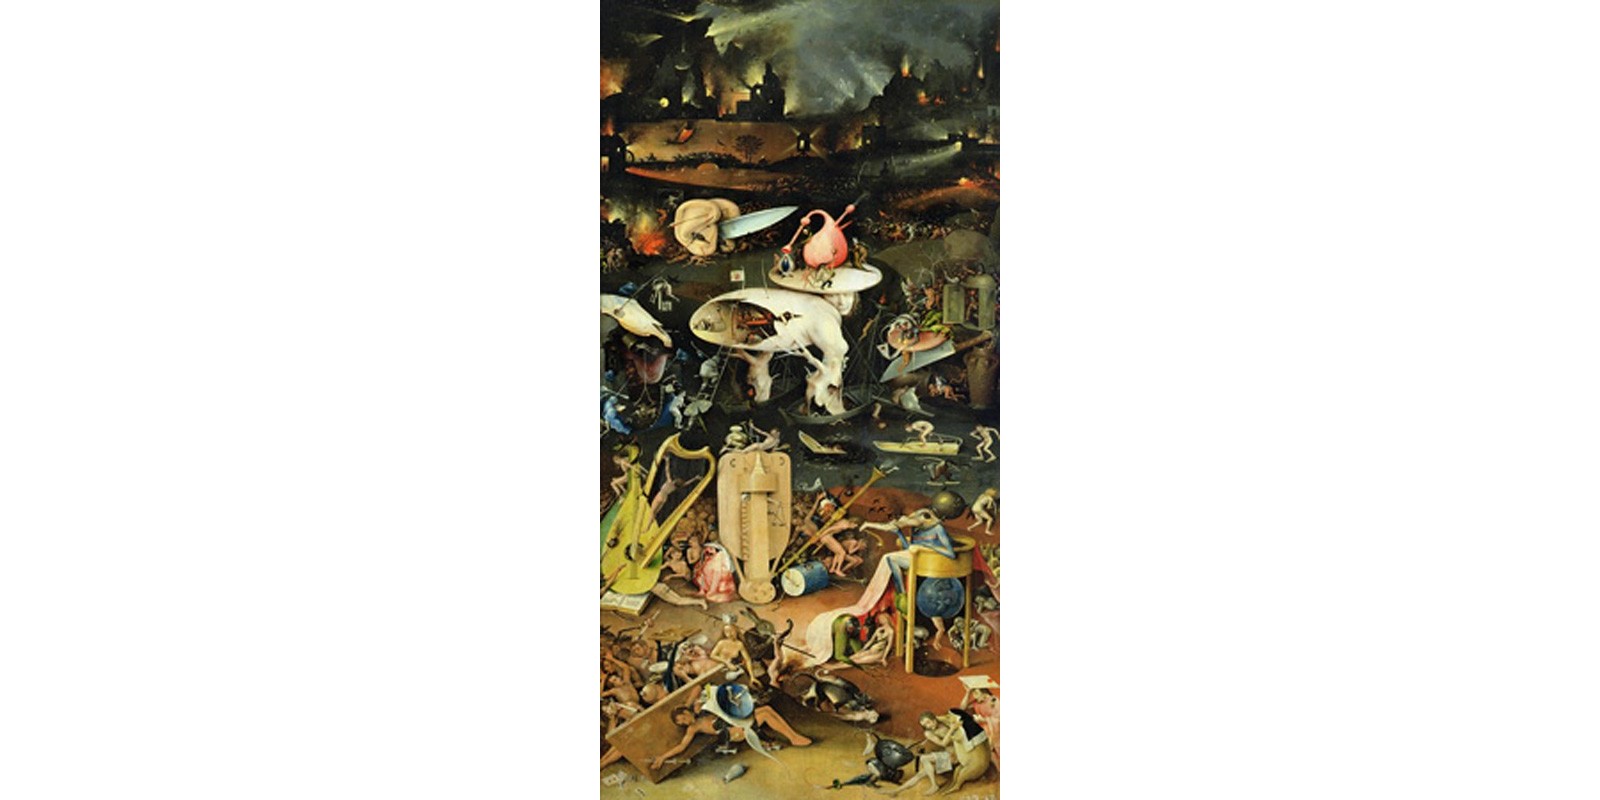 Hieronymus Bosch - The Garden of Earthly Delights III